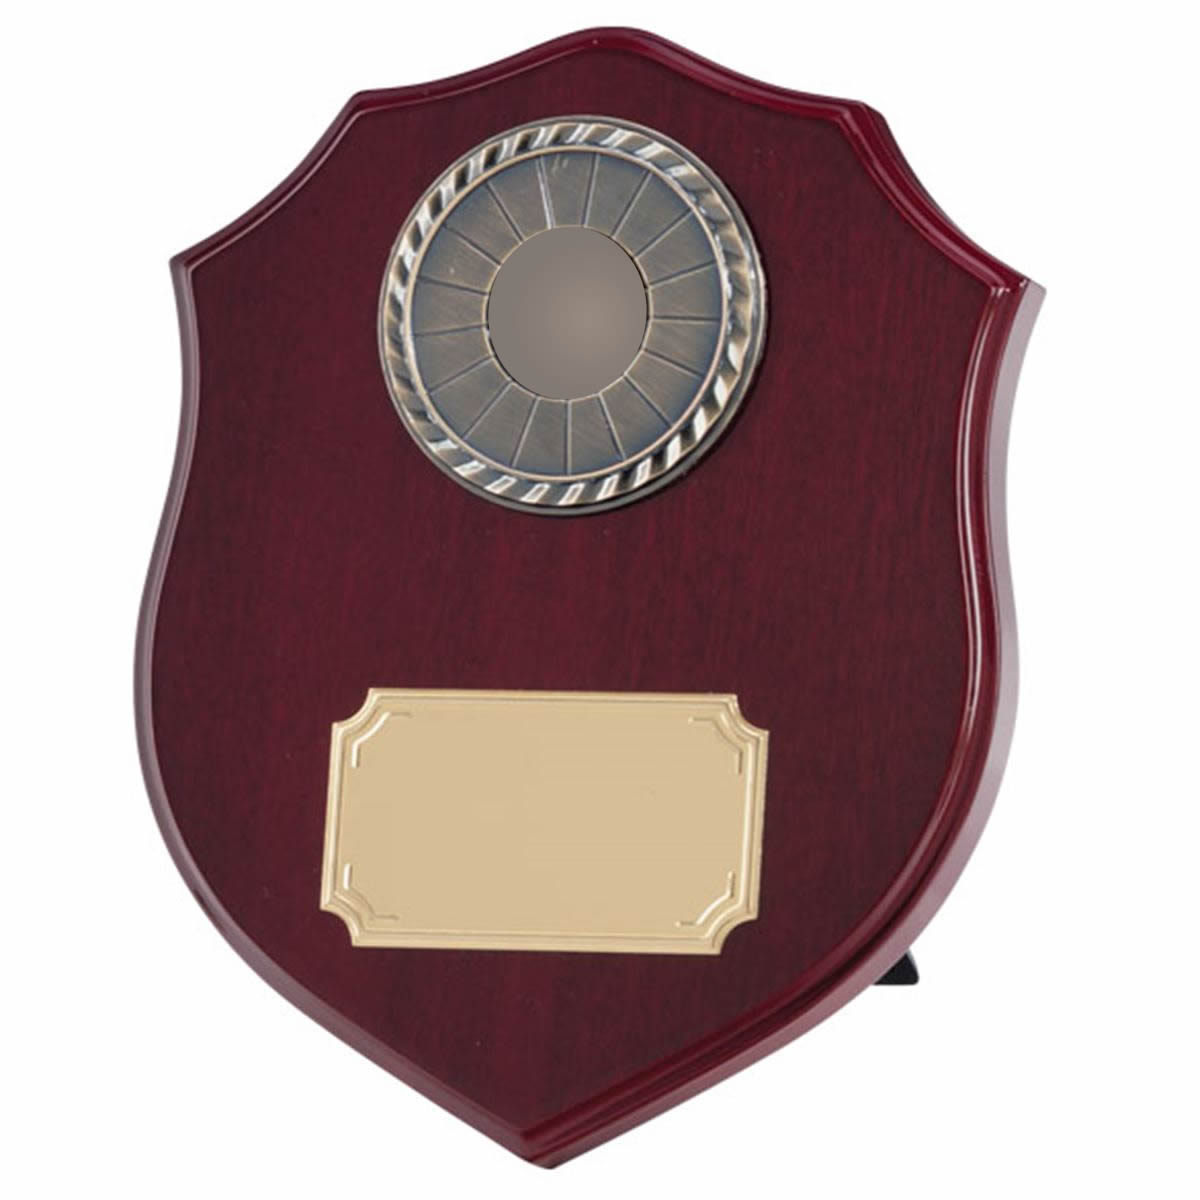 Ontario Premium Piano Finish Presentation Shield Award